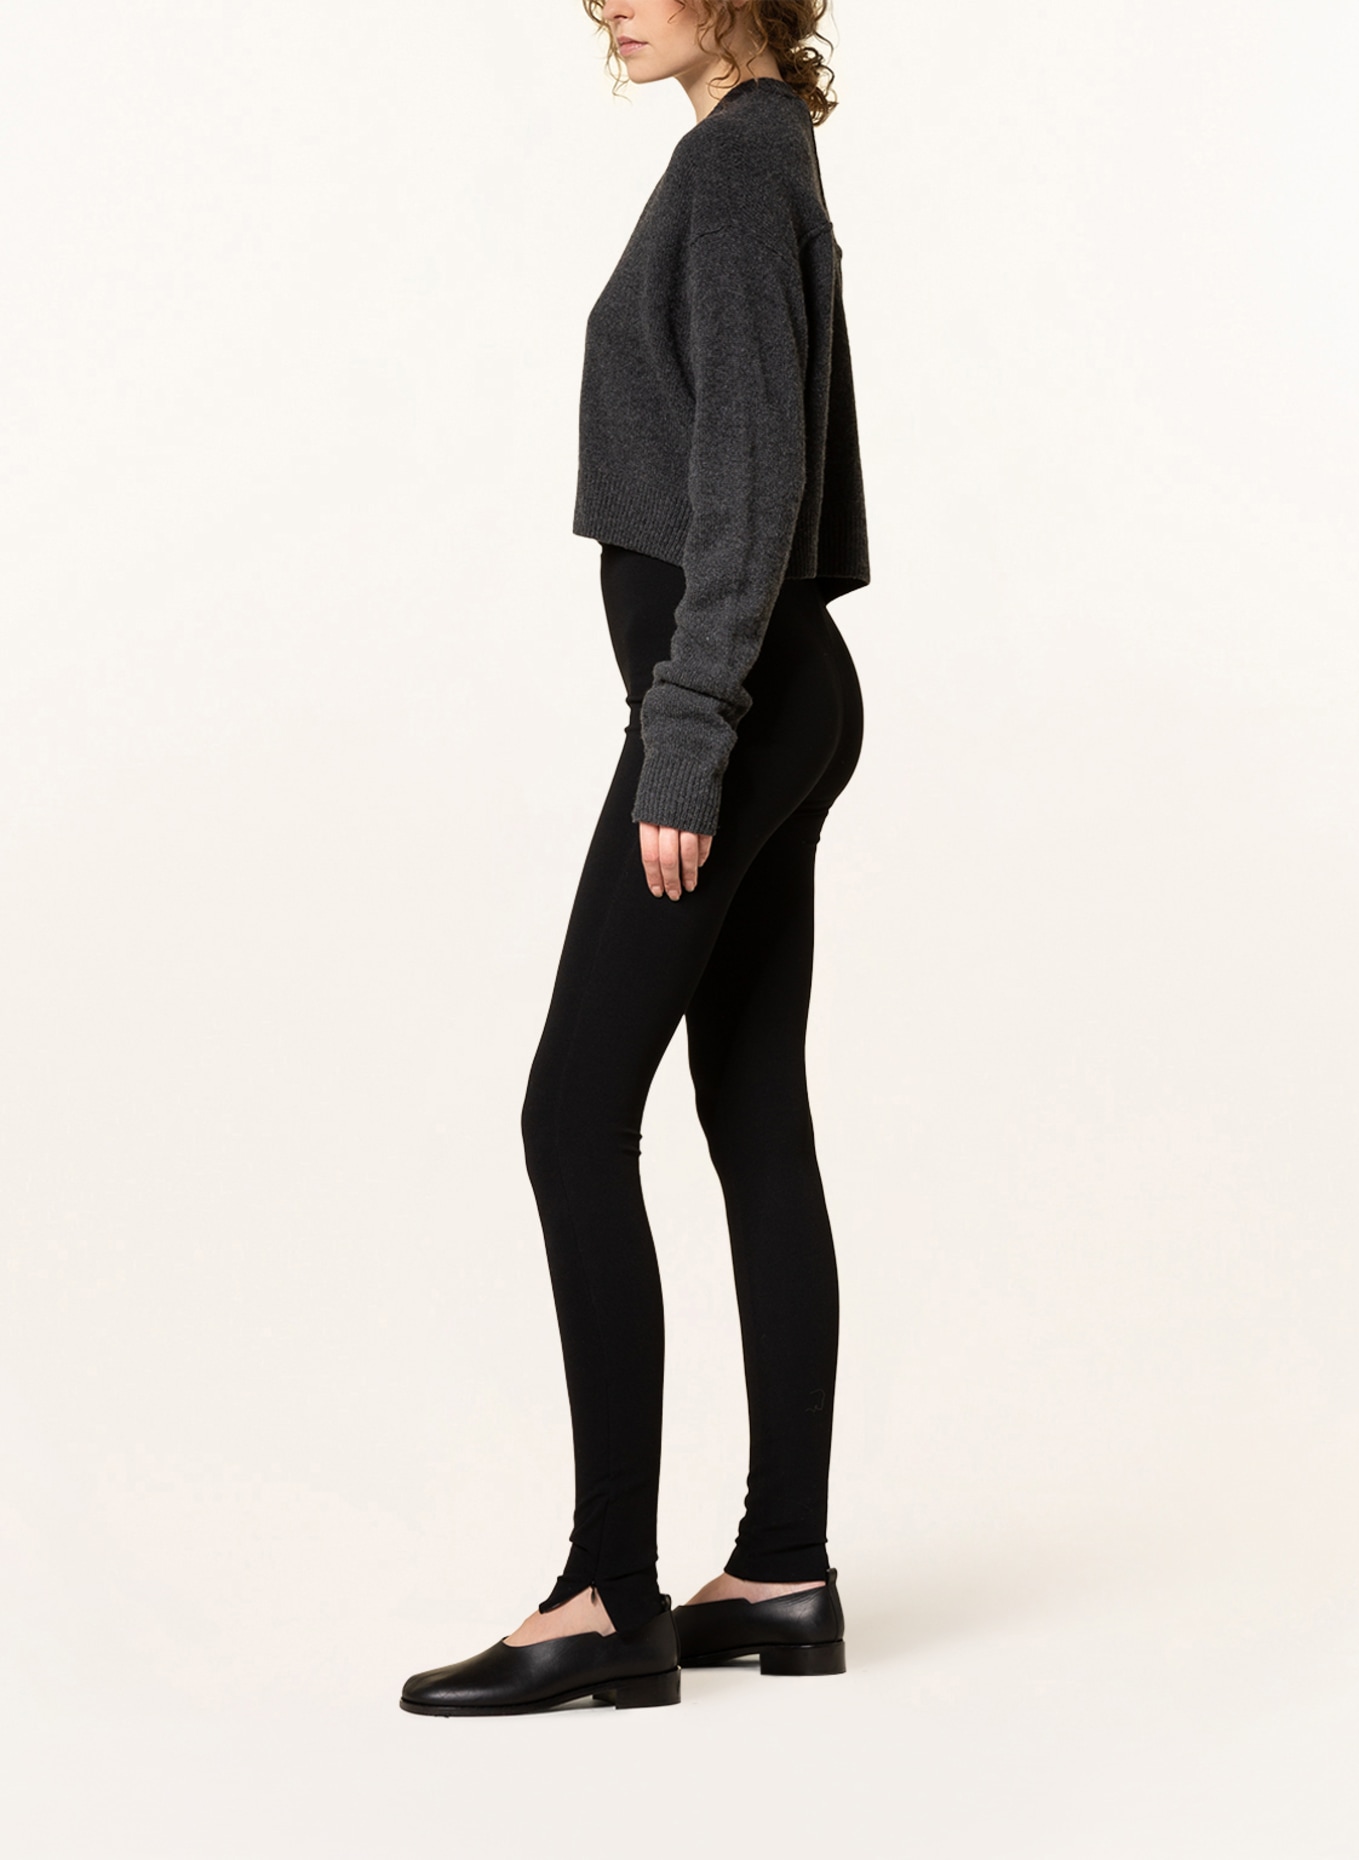 Zara, Pants & Jumpsuits, Zara Black Leggings With Ballerina Foot Straps